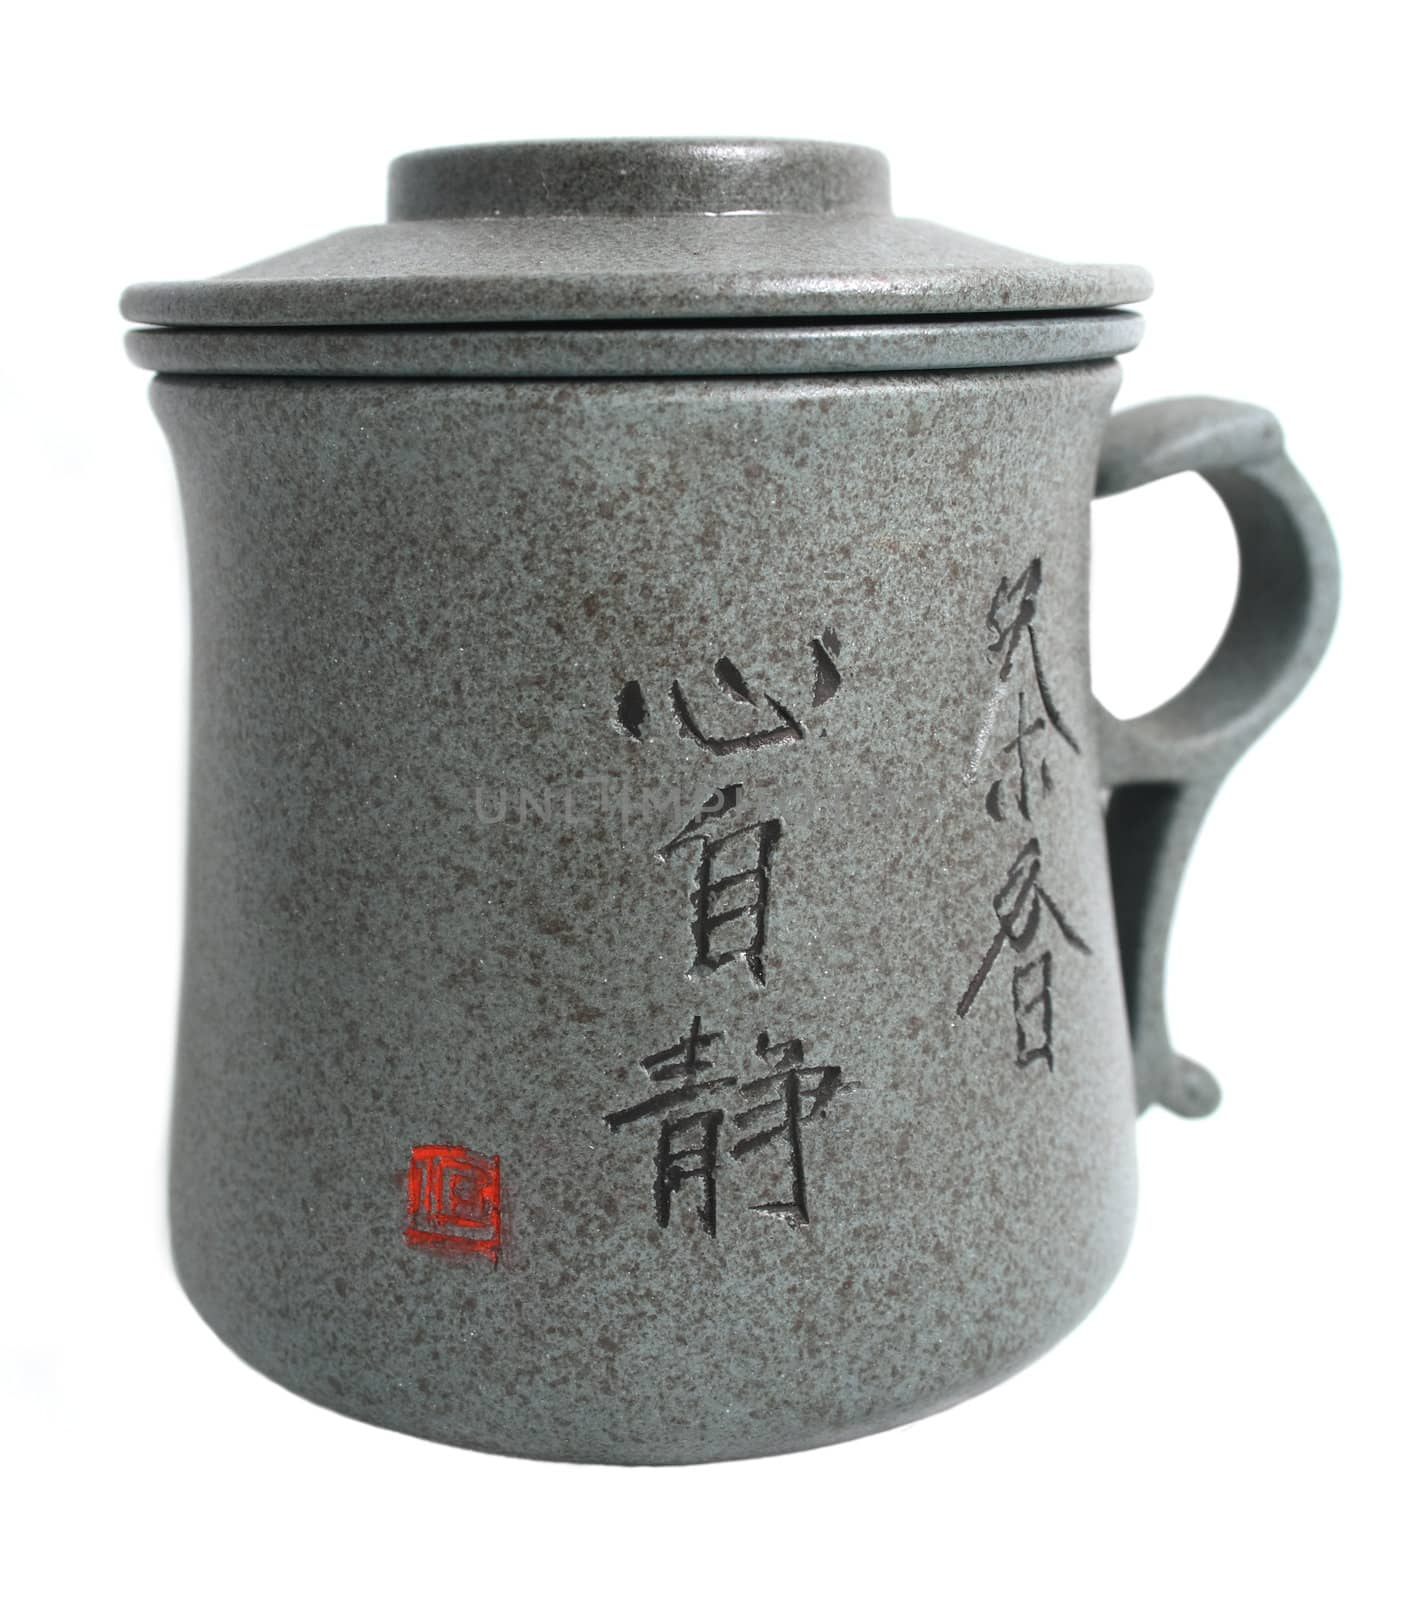 A unique design Chinese tea cup.